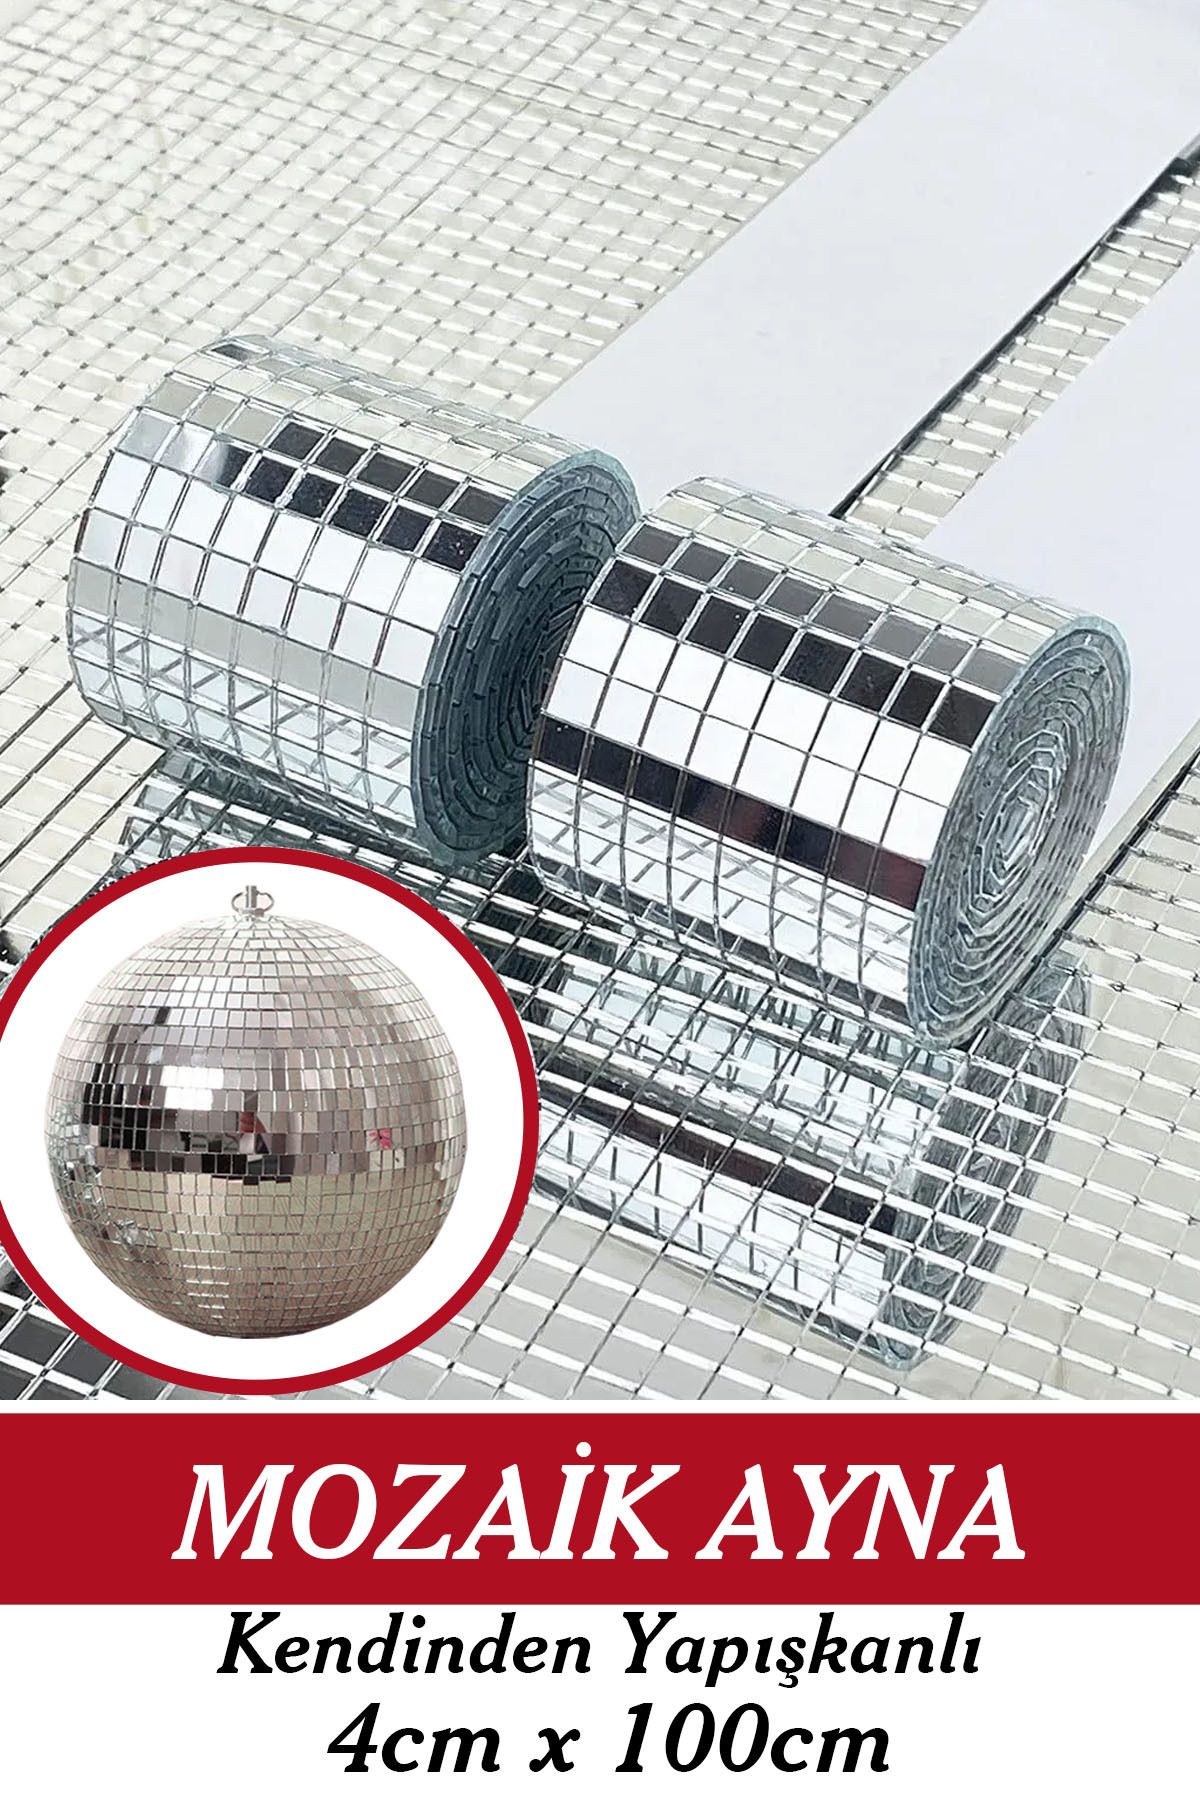 Vox Art Mini Mozaik Ayna,5x5 mm 1600 adet Kendinden Yapışkanlı Levha